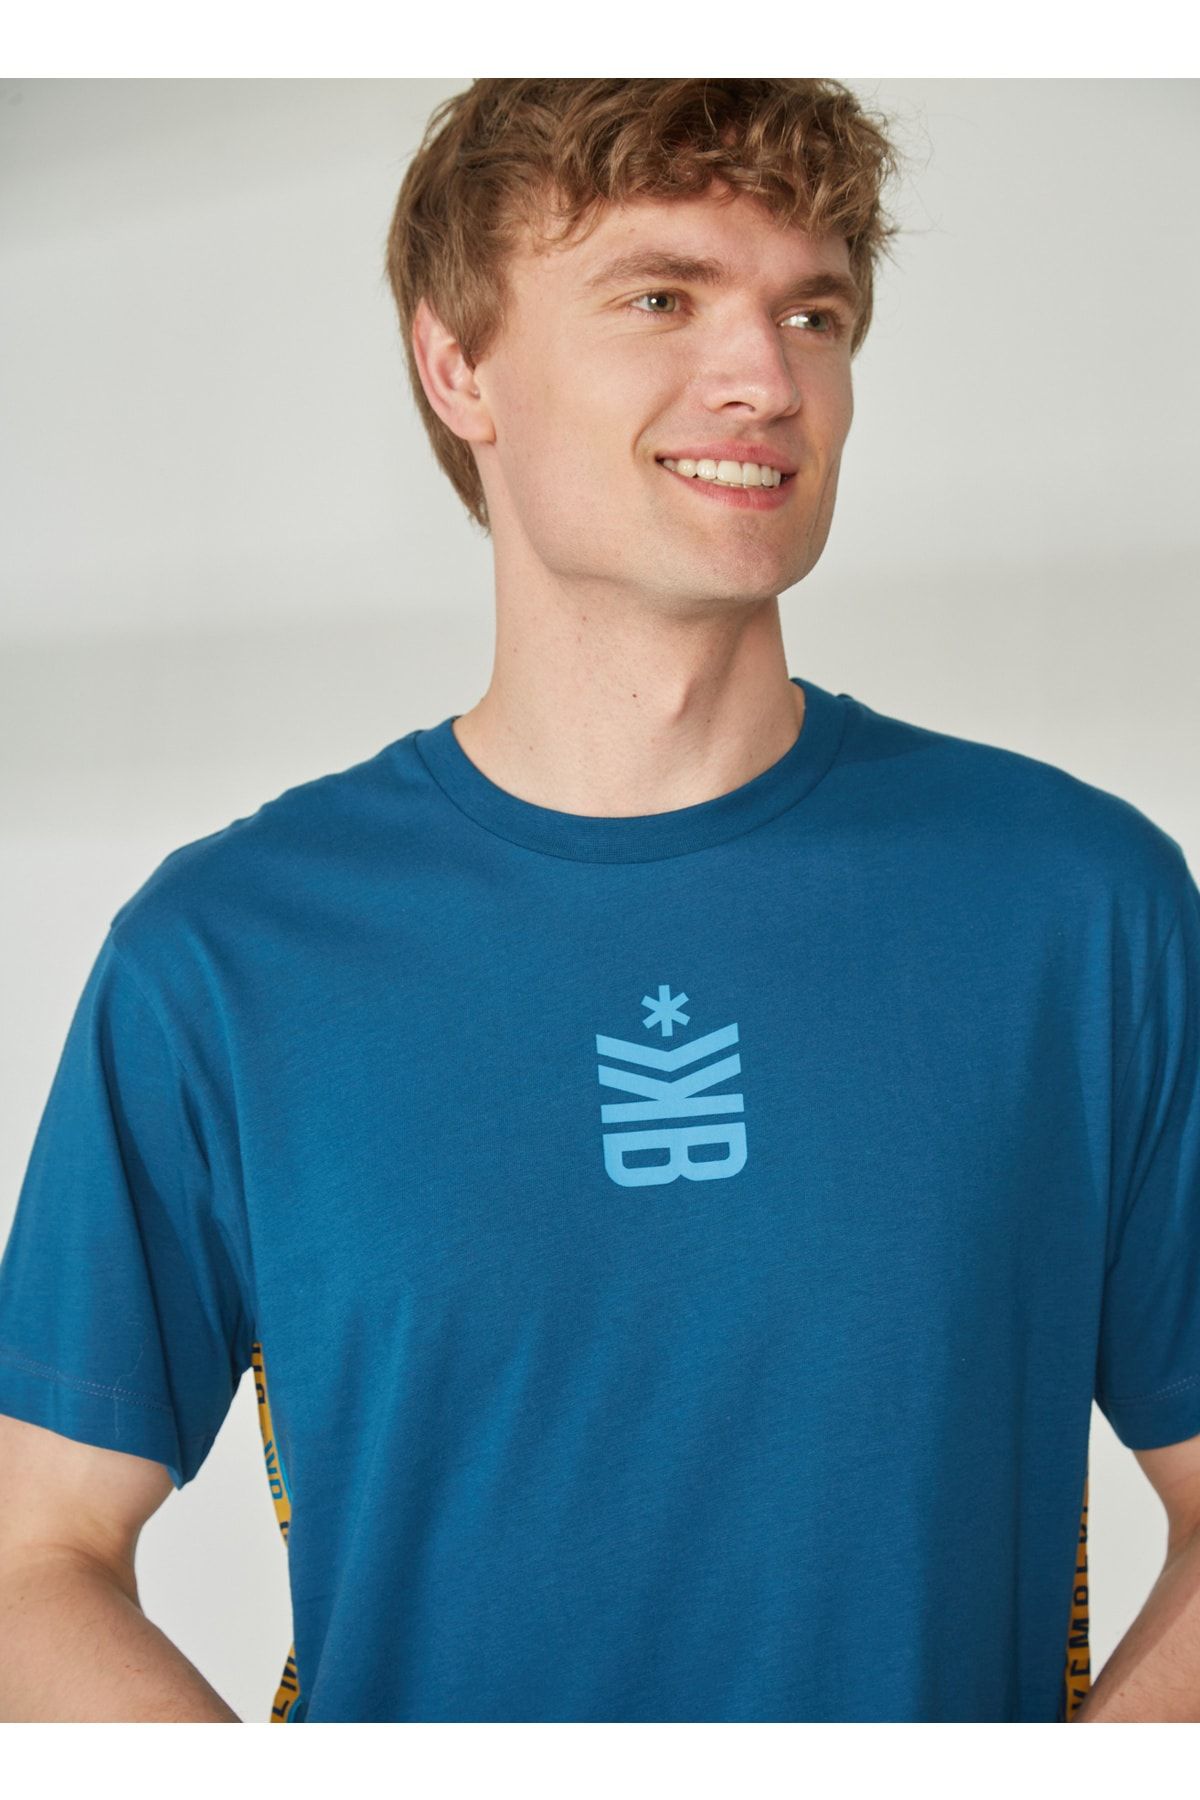 Bikkembergs Turkuaz Erkek T-Shirt C 4 114 22